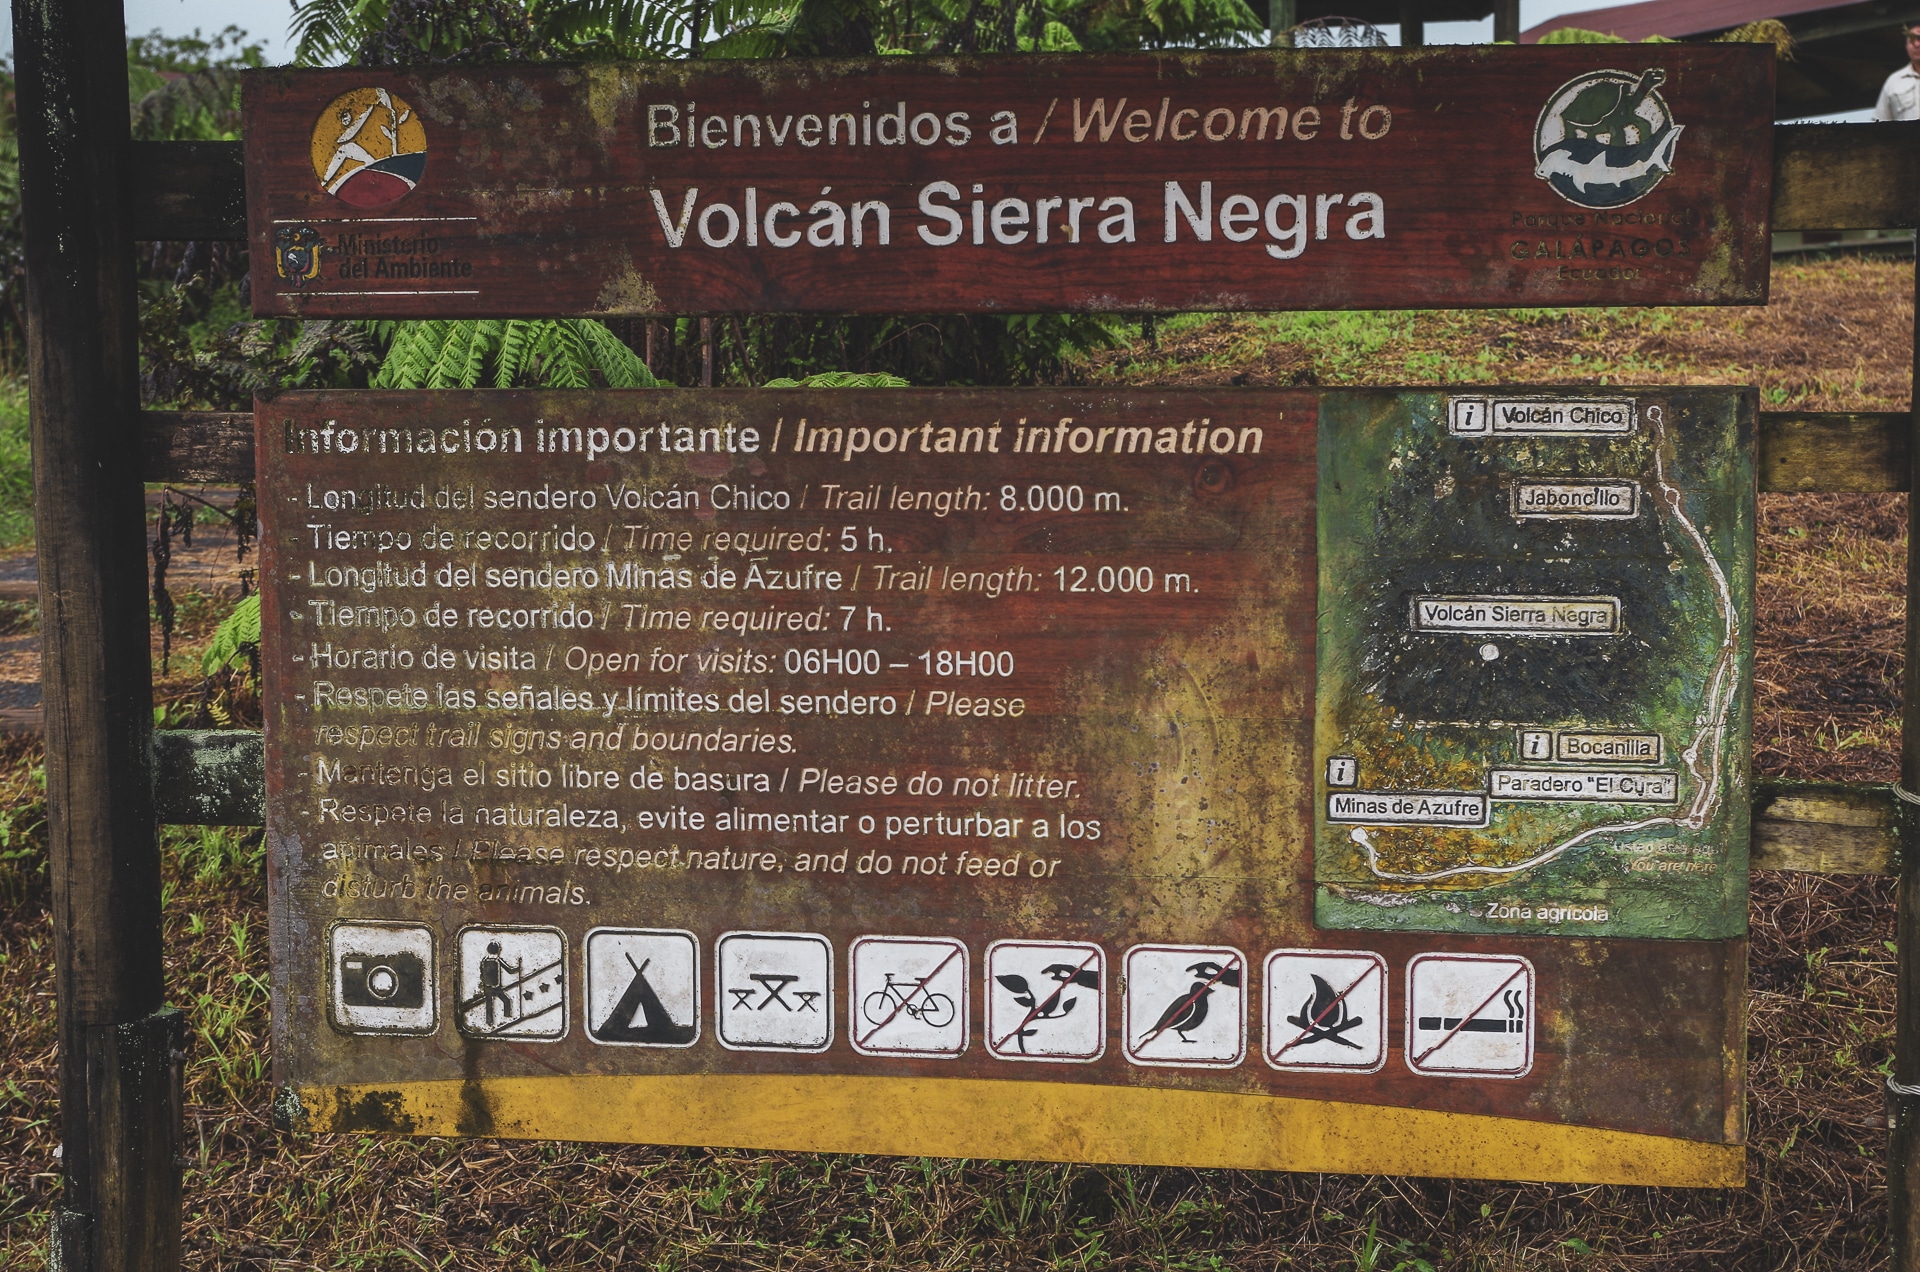 panneau informatif Volcan Sierra Negra Galapagos